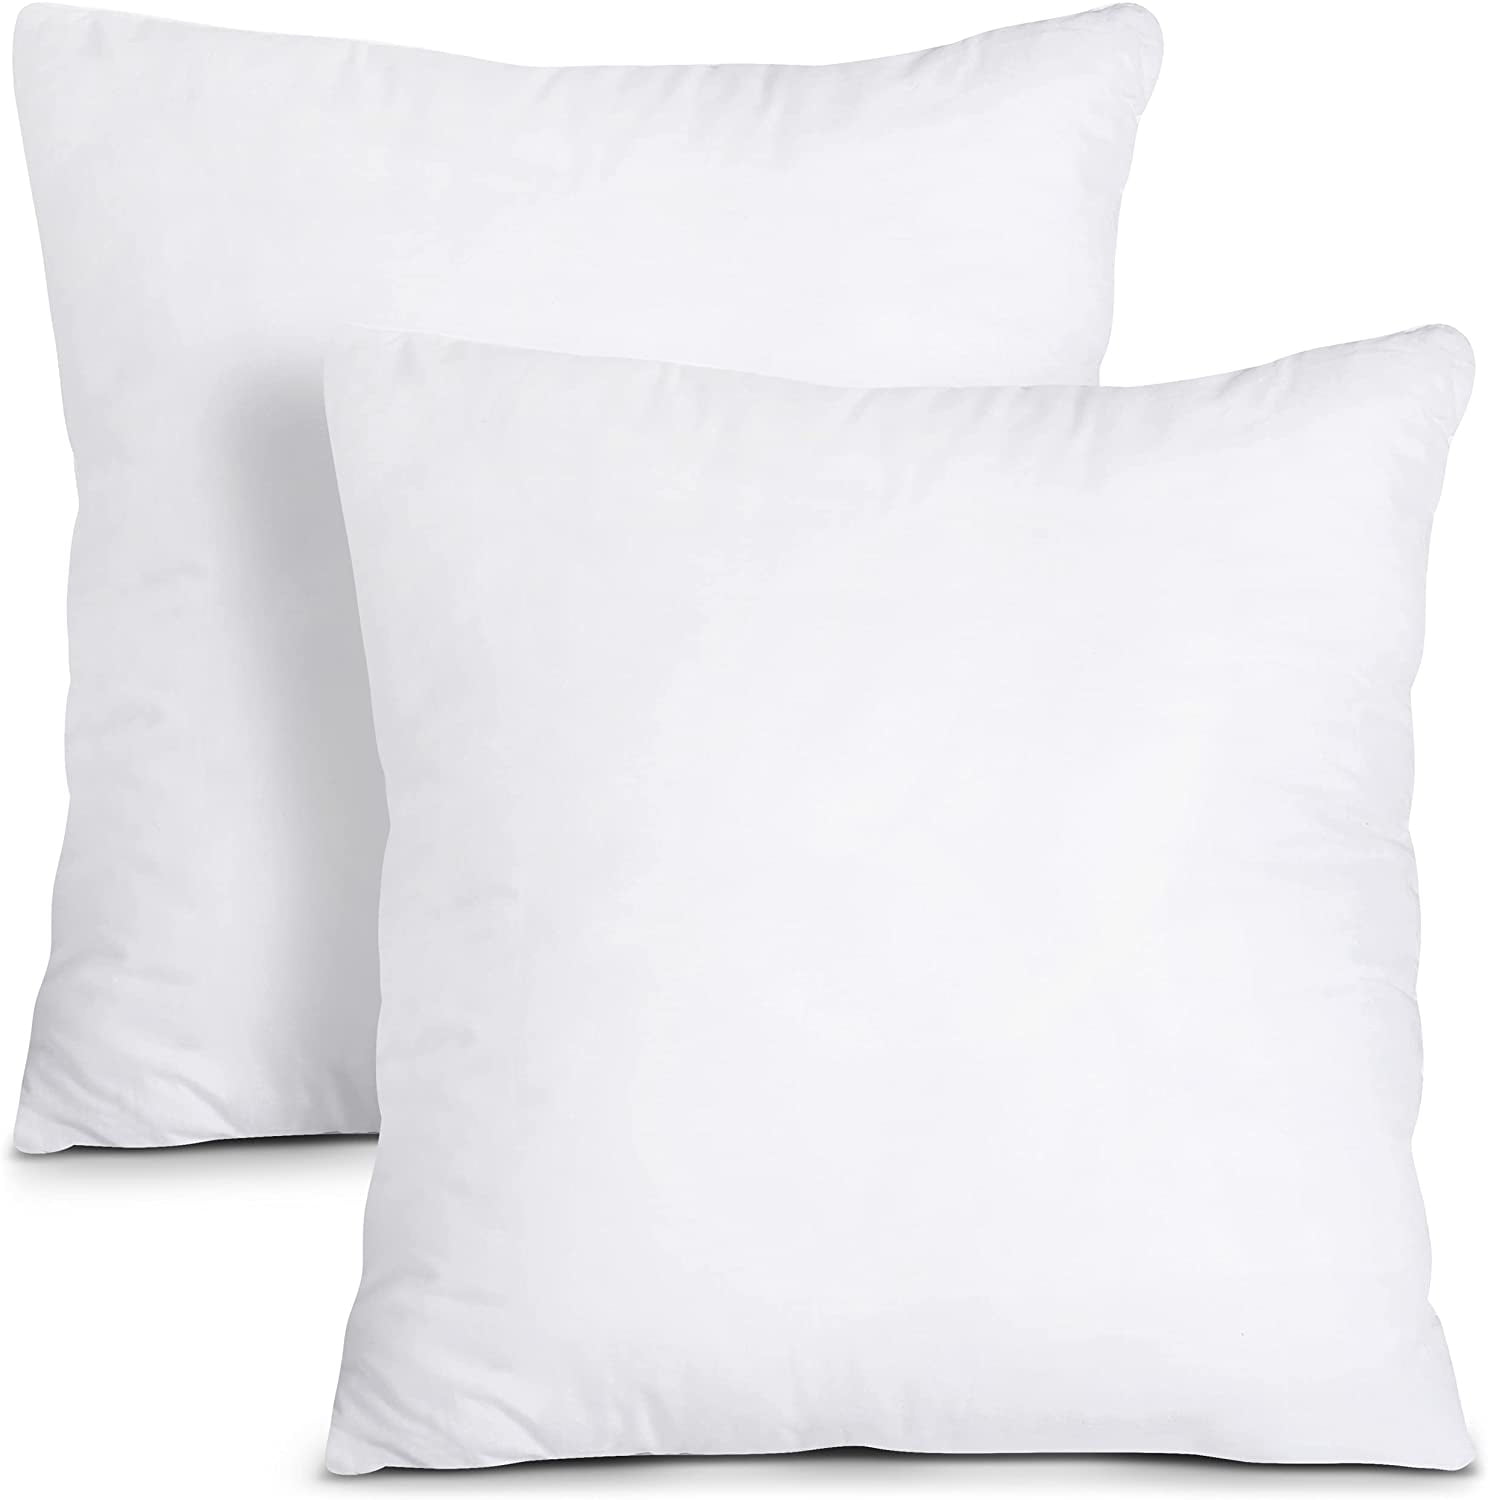 Utopia Bedding Throw Pillows Insert (Pack of 2, White) - 24 x 24